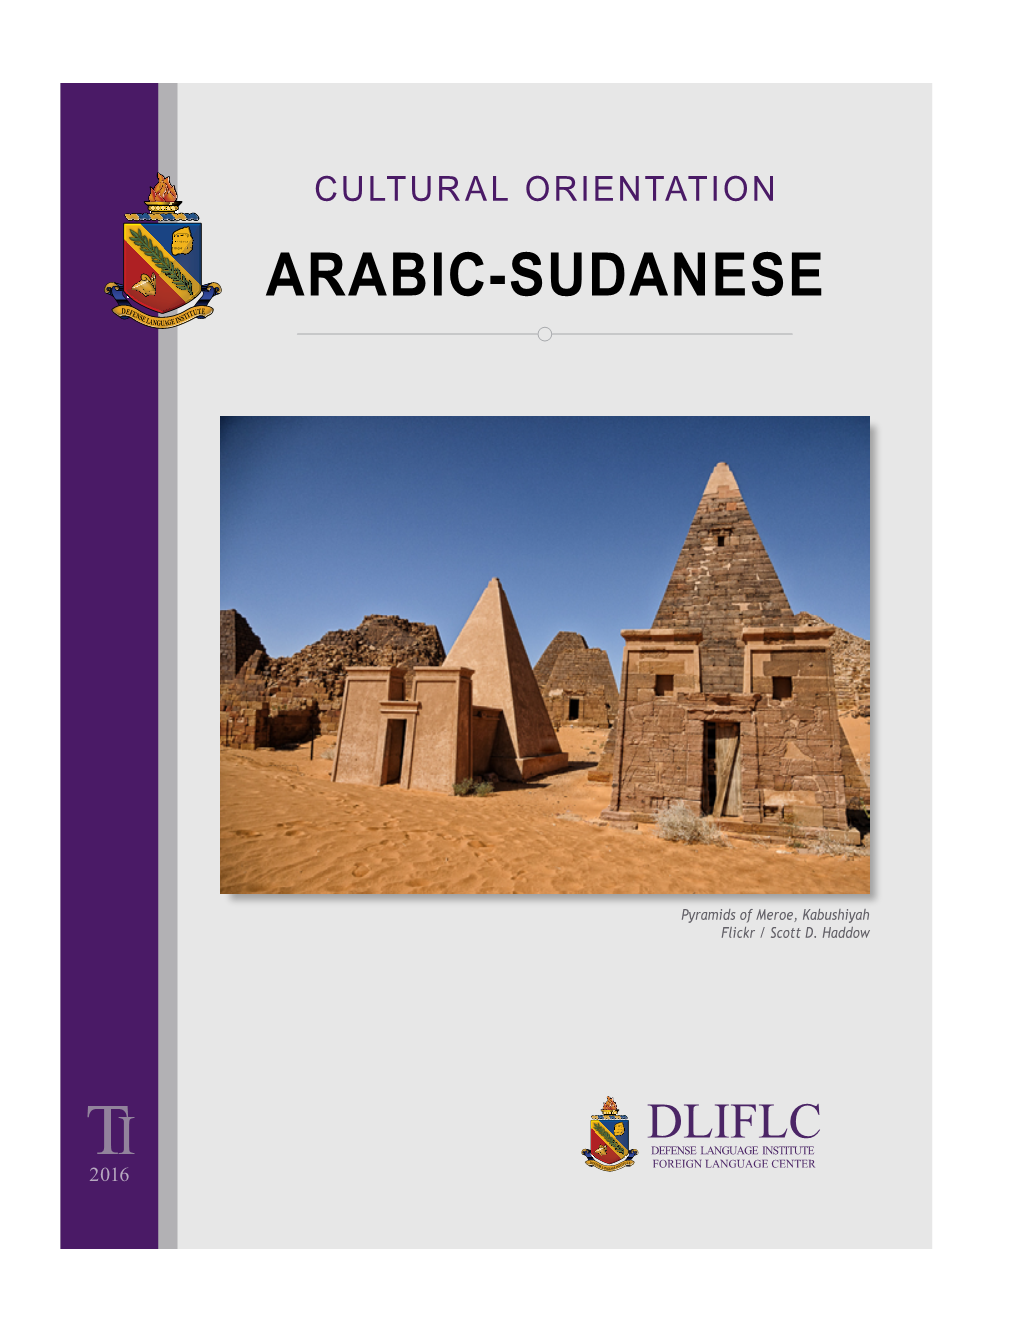 Language Institute Foreign Language Center Cultural Orientation | Arabic-Sudanese